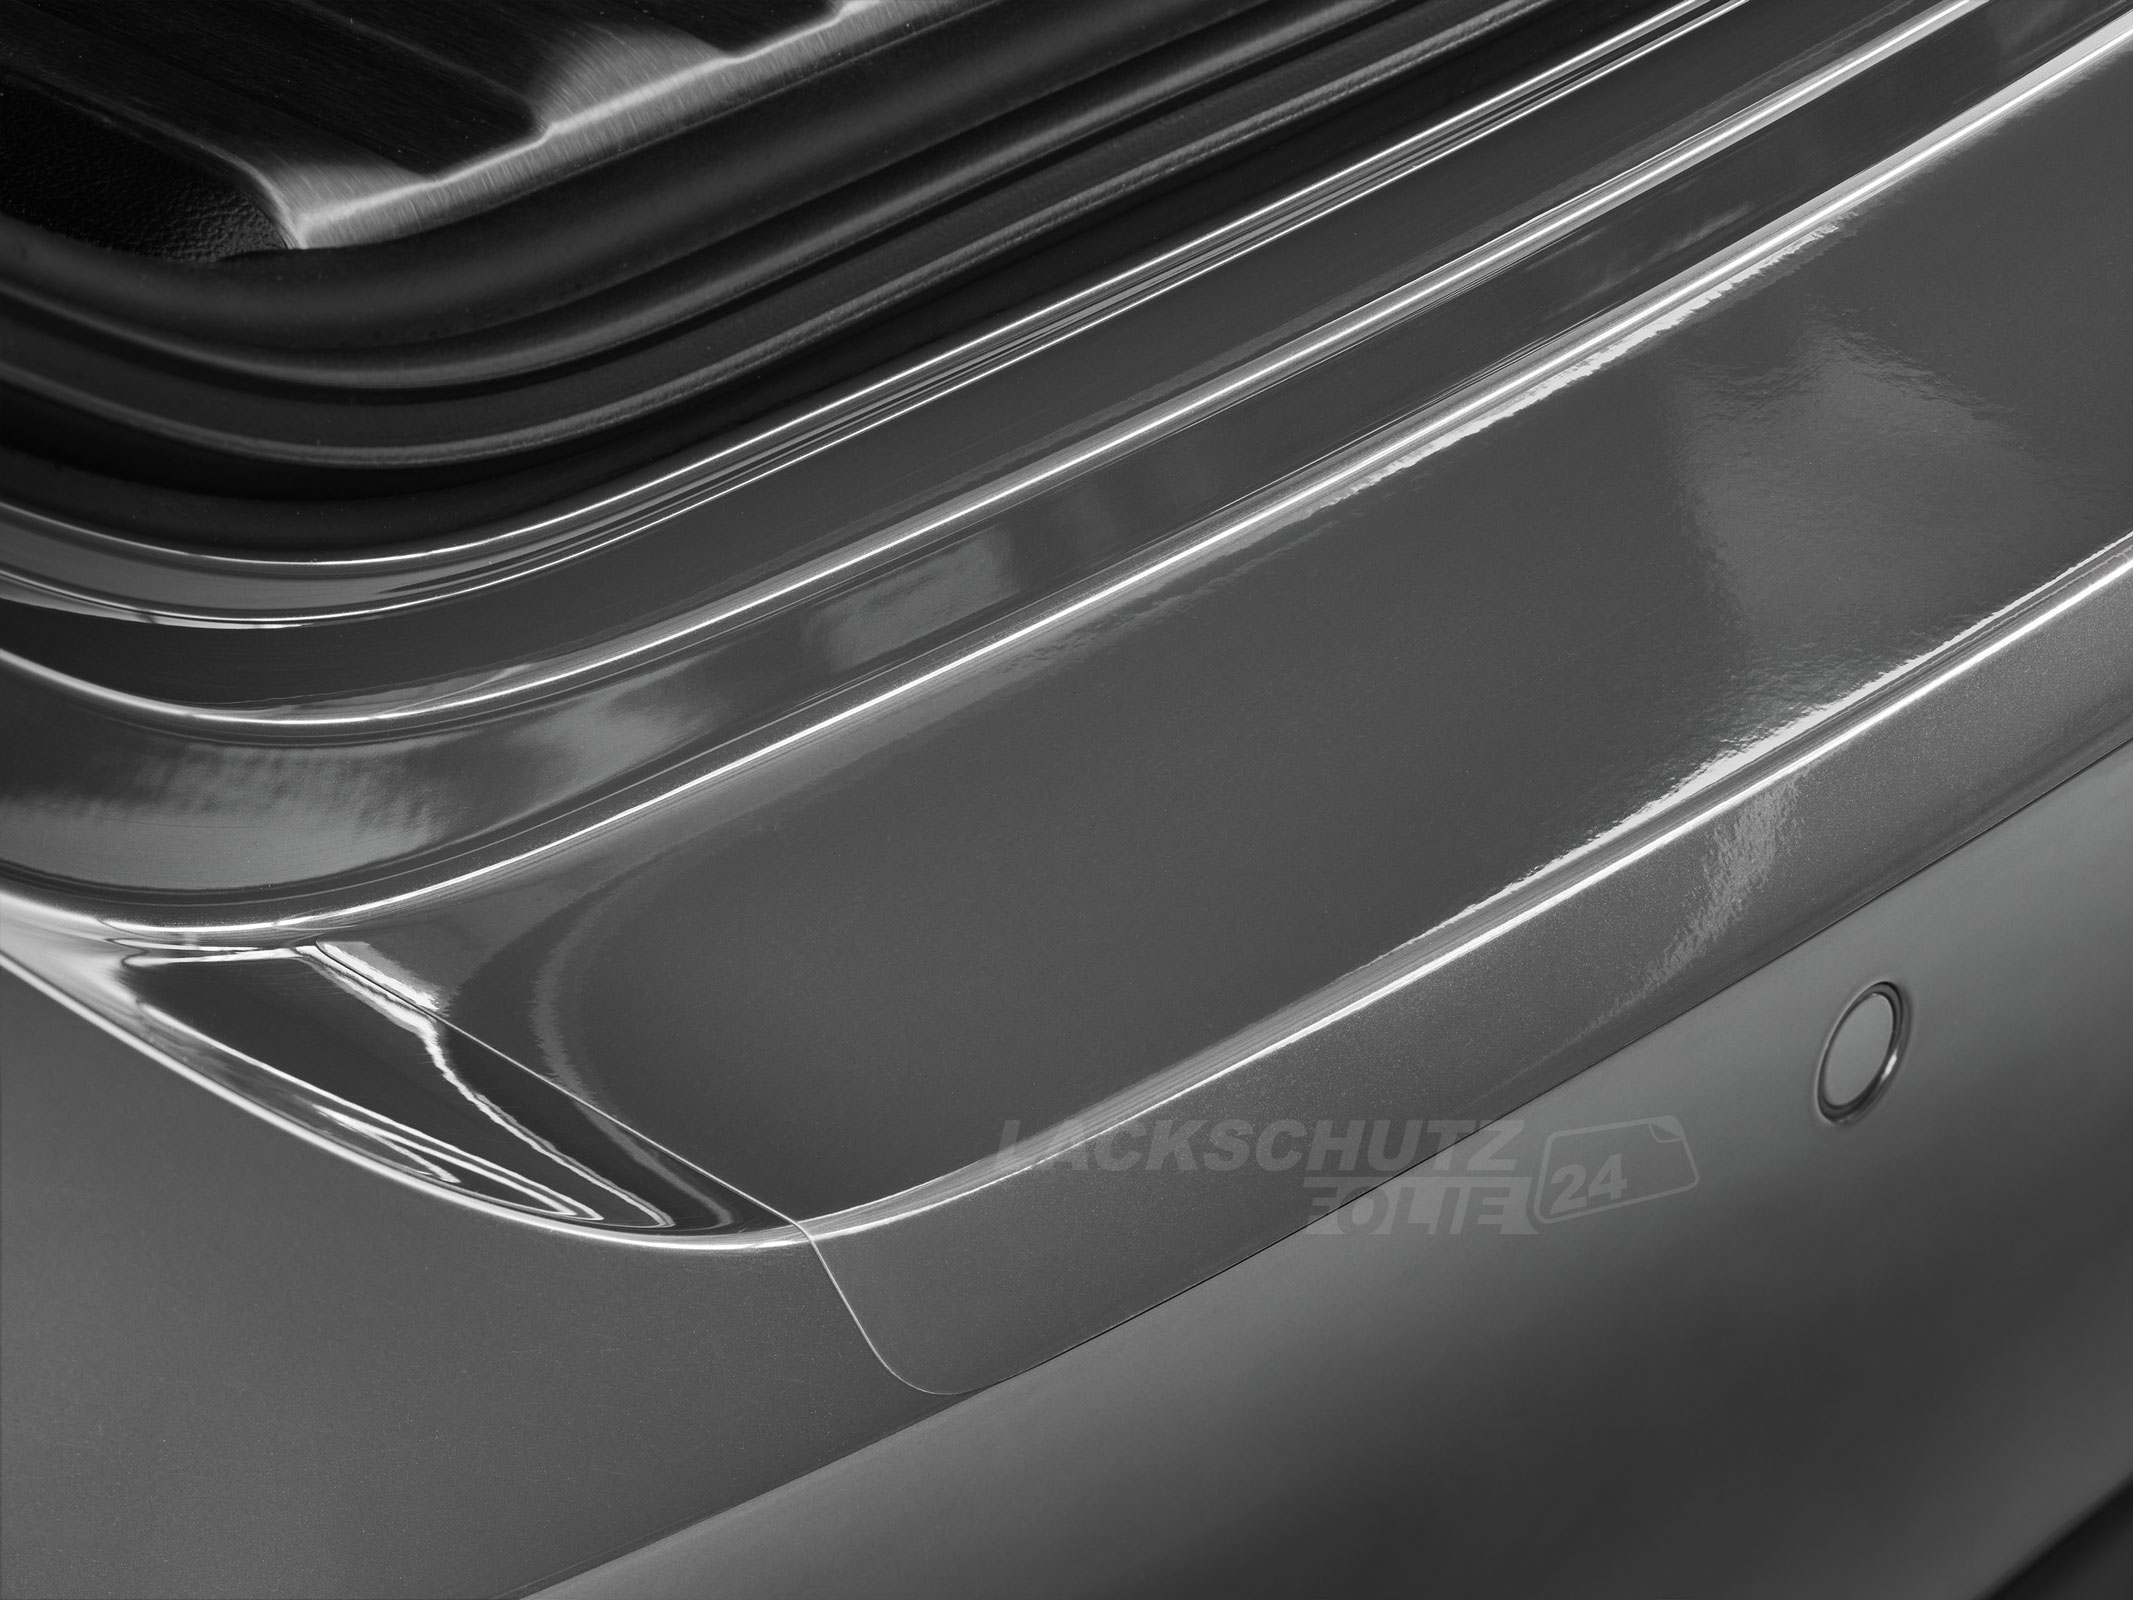 Ladekantenschutzfolie - Transparent Glatt Hochglänzend 150 µm stark für Audi A6 Avant (Kombi) C7, Typ 4G, BJ 10/2011-2018